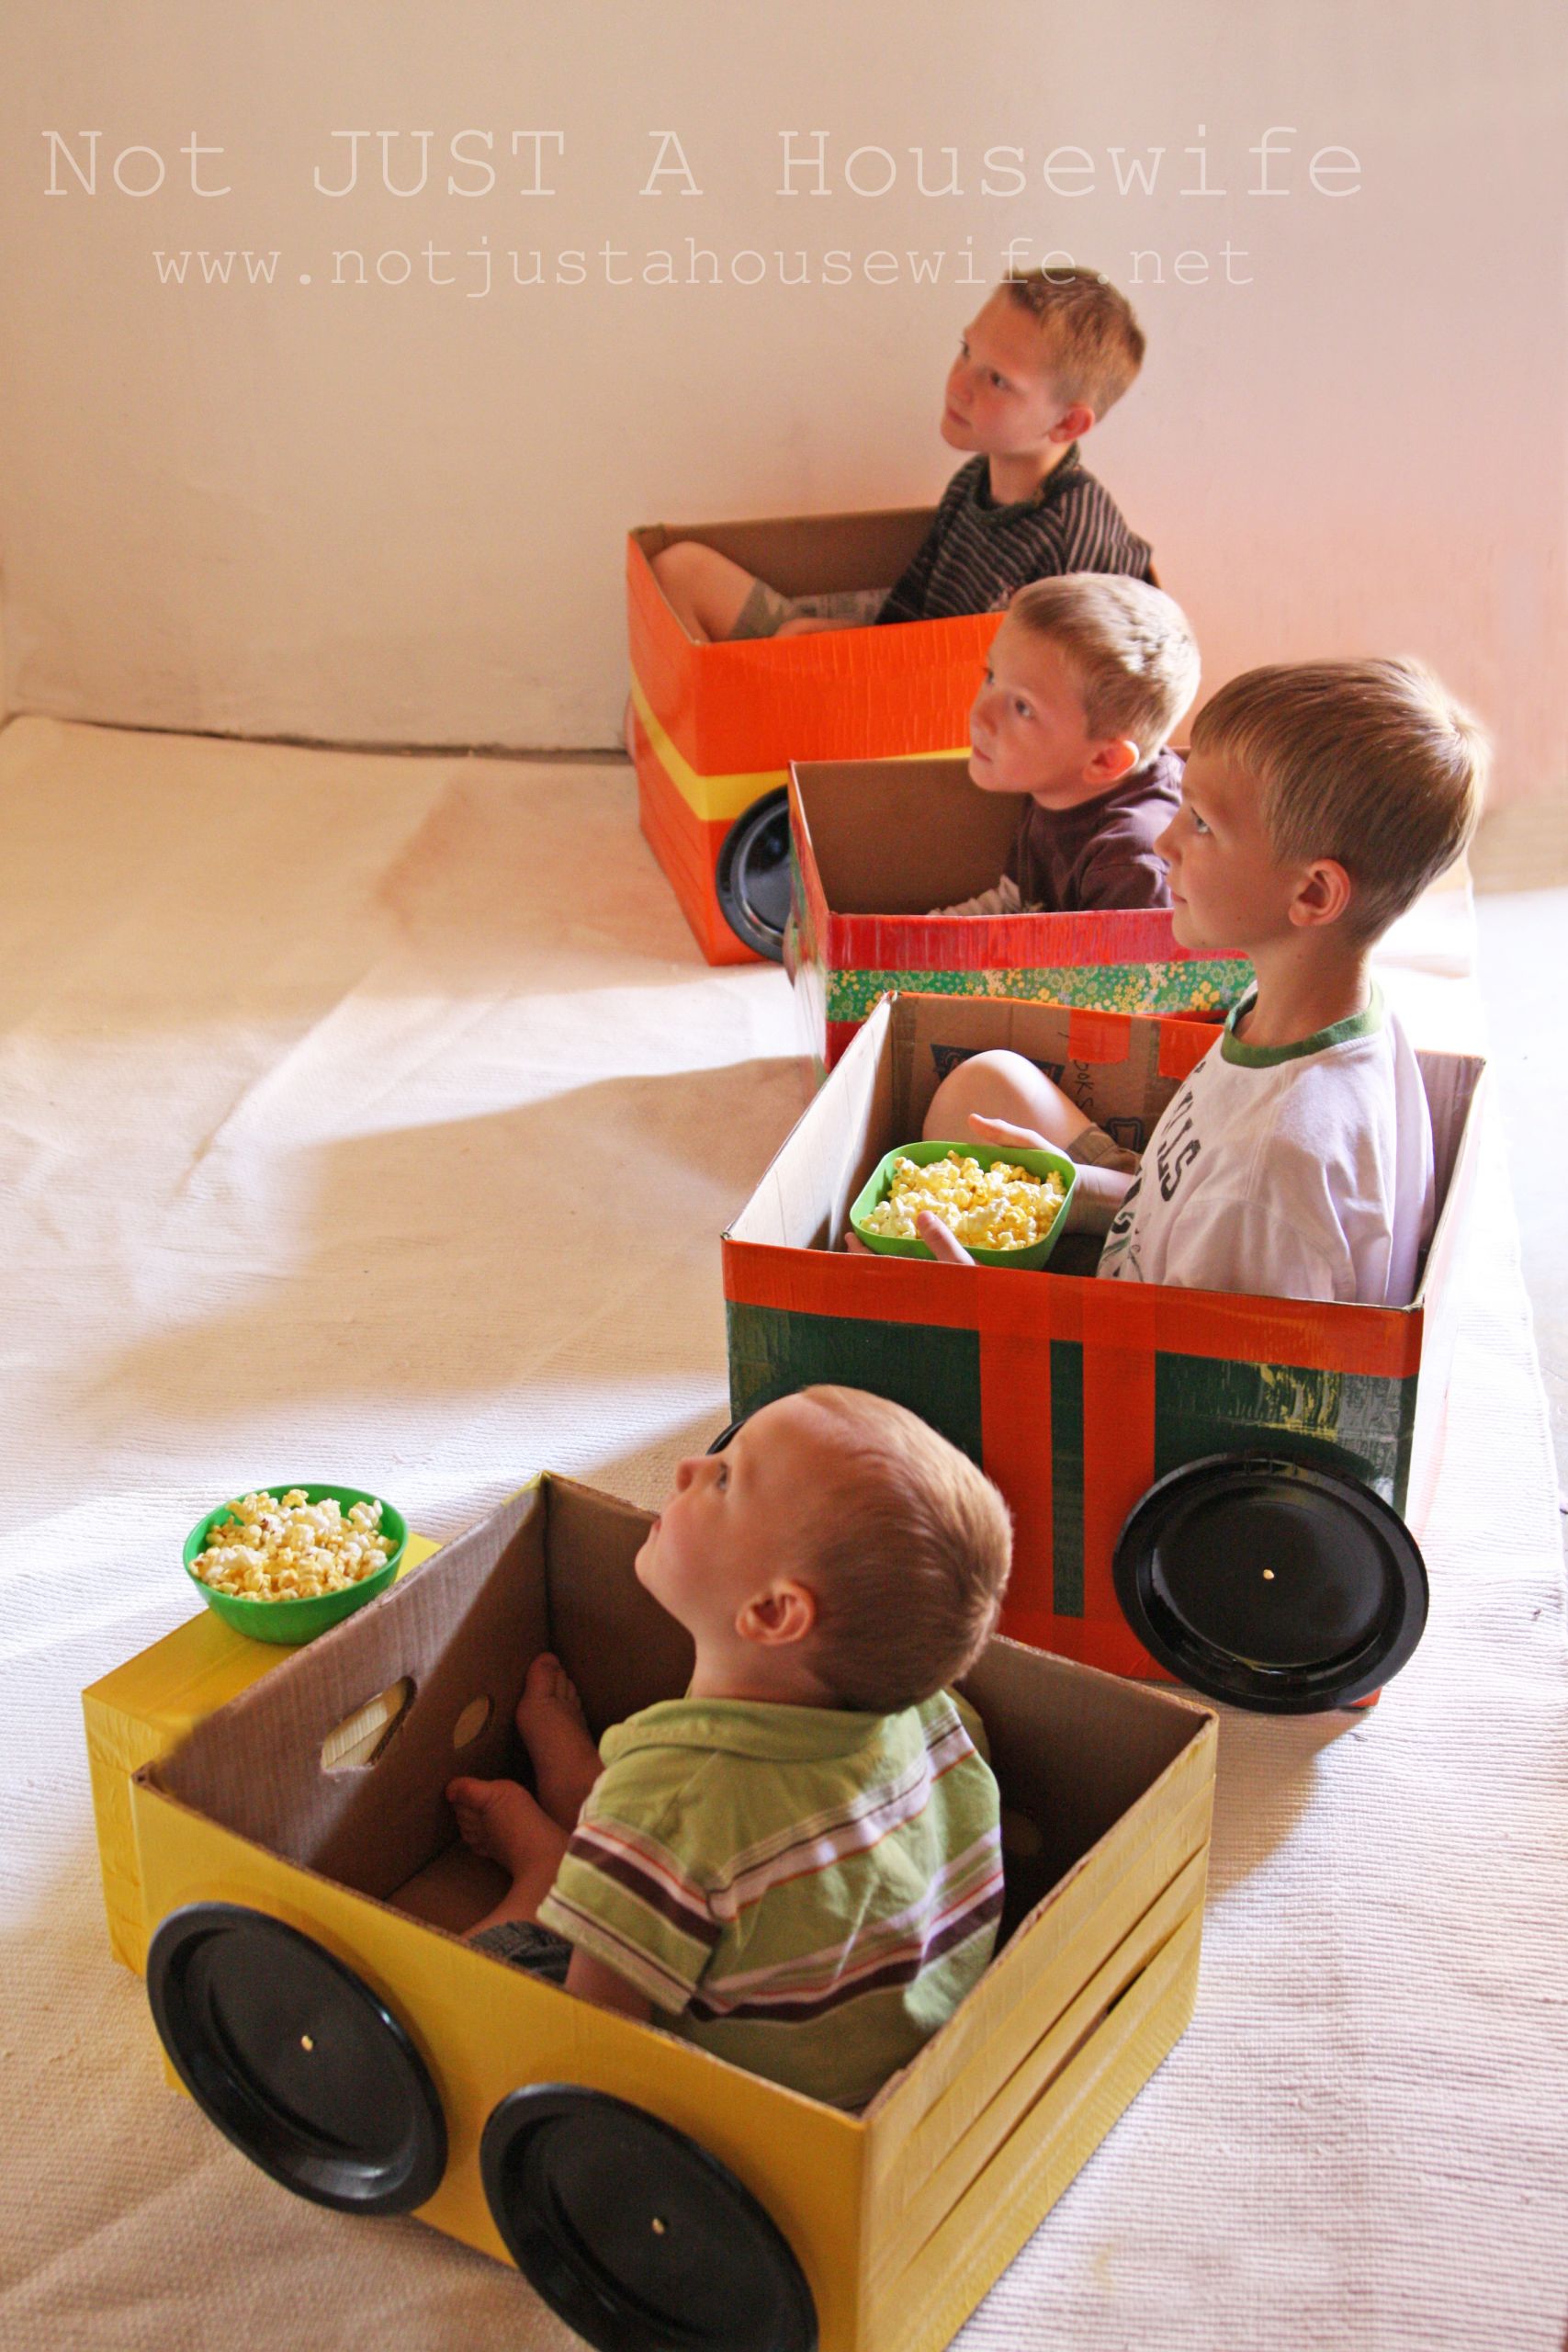 DIY Activities For Toddlers
 32 Fun and Creative DIY Indoor Activities Your Kids Will Love